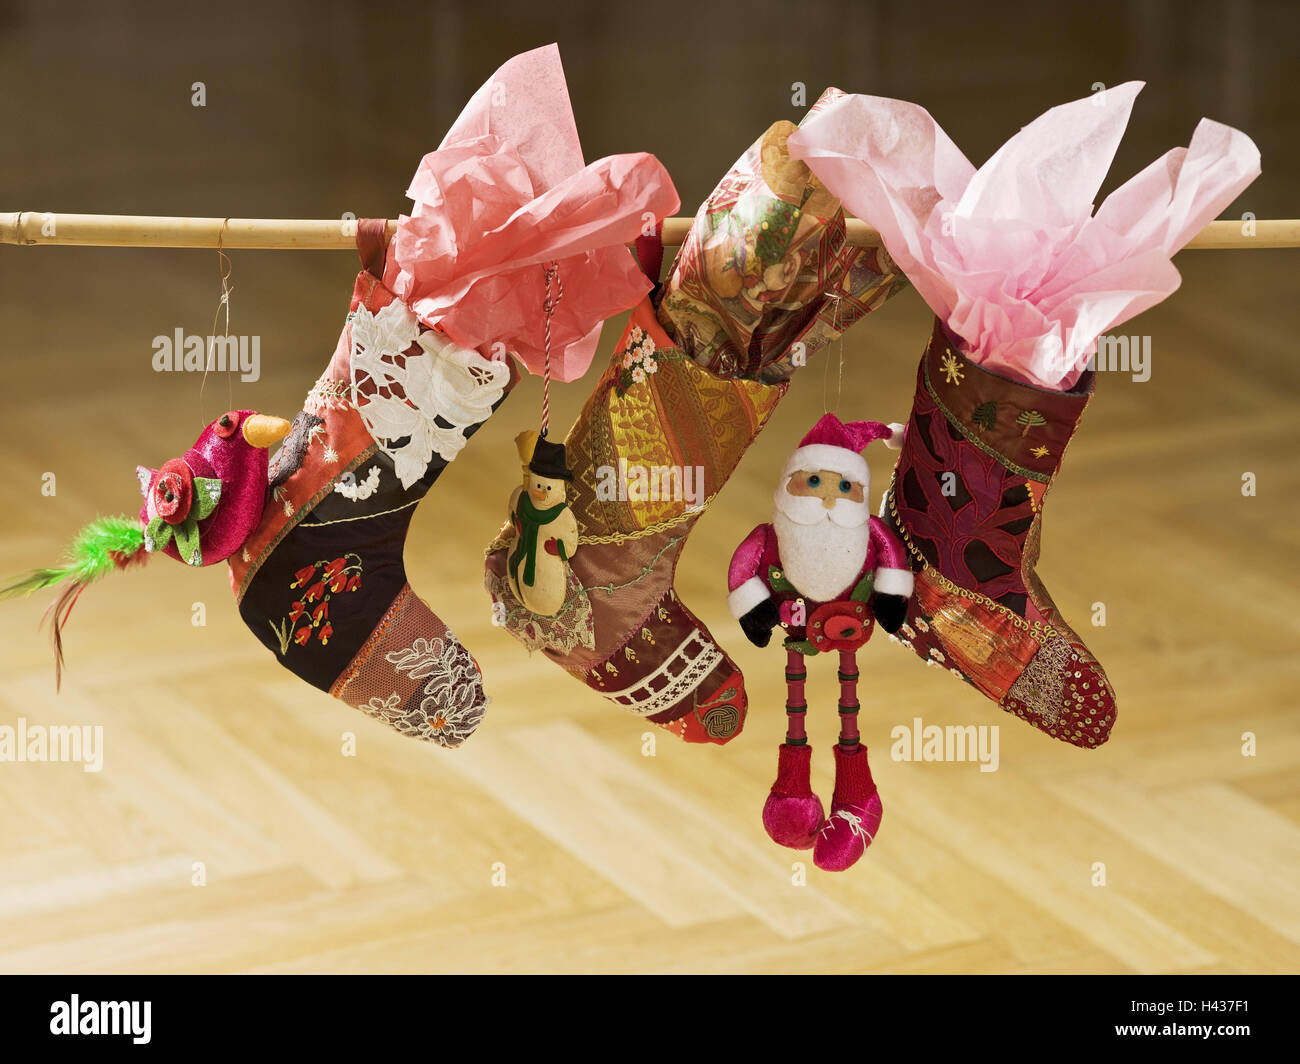 Bamboo stick, Santa's boot, hang, Weihnachtsdeko, xmas, decoration, Santa's figure, Santa Claus, figure, Christmas mood, Christmas presents, presents, Santa's boots, decoration boots, atmospheric, celebrate, festively, parquet flooring, Stock Photo